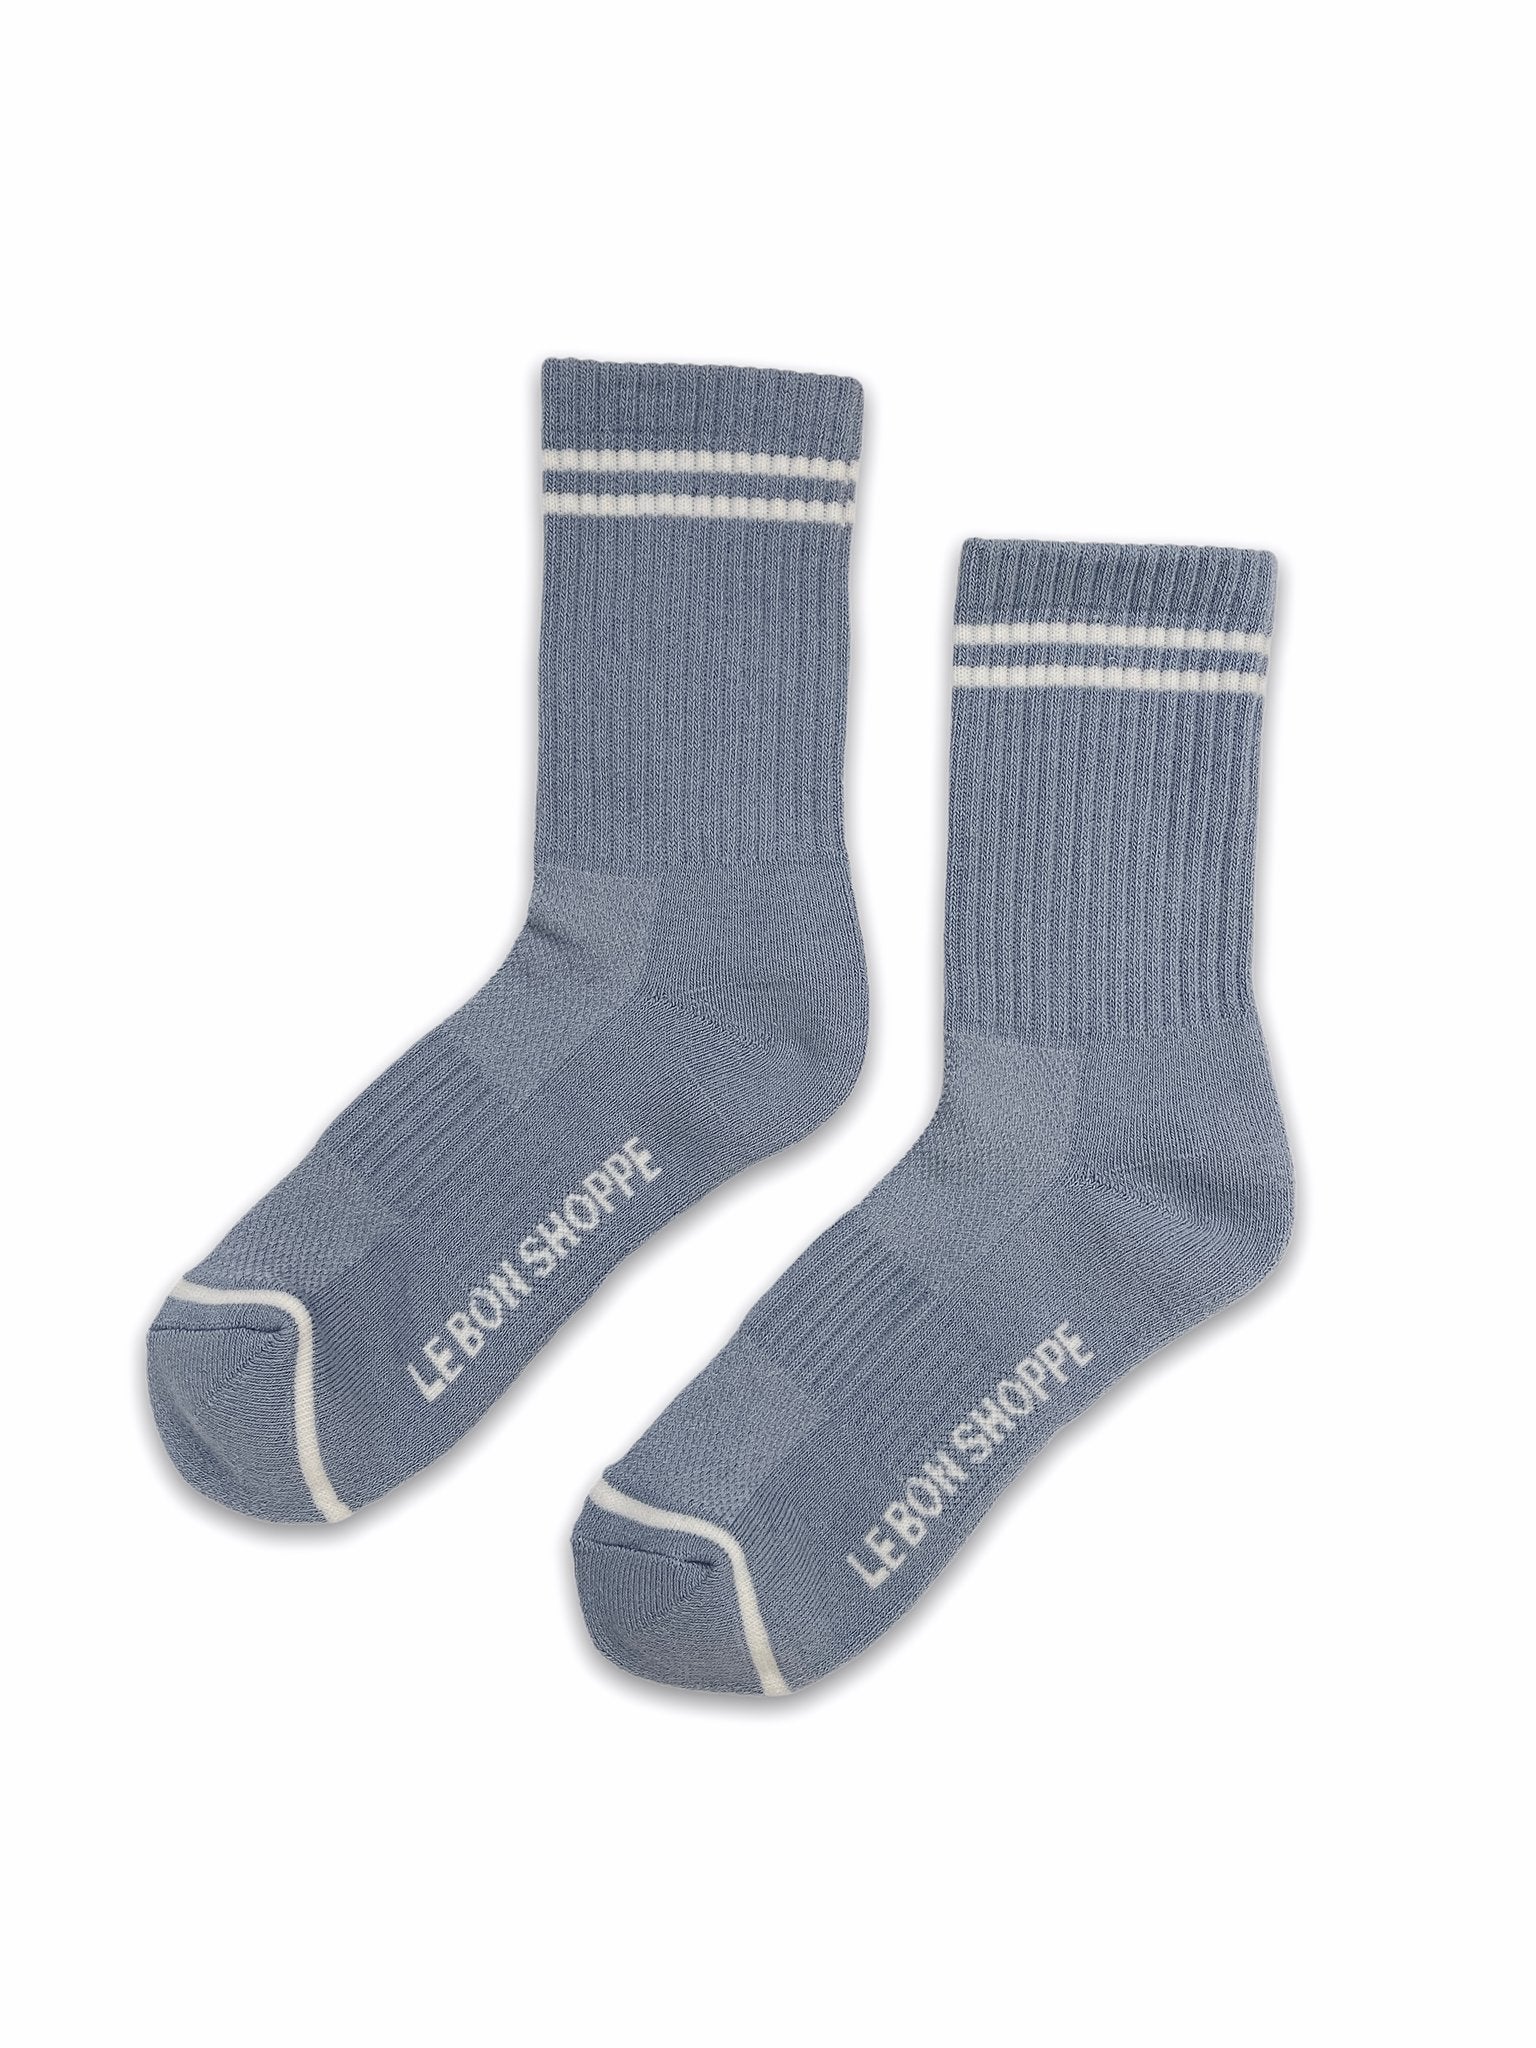 Le Bon Shoppe Boyfriend Socks, Blue Grey - White Feather Boutique